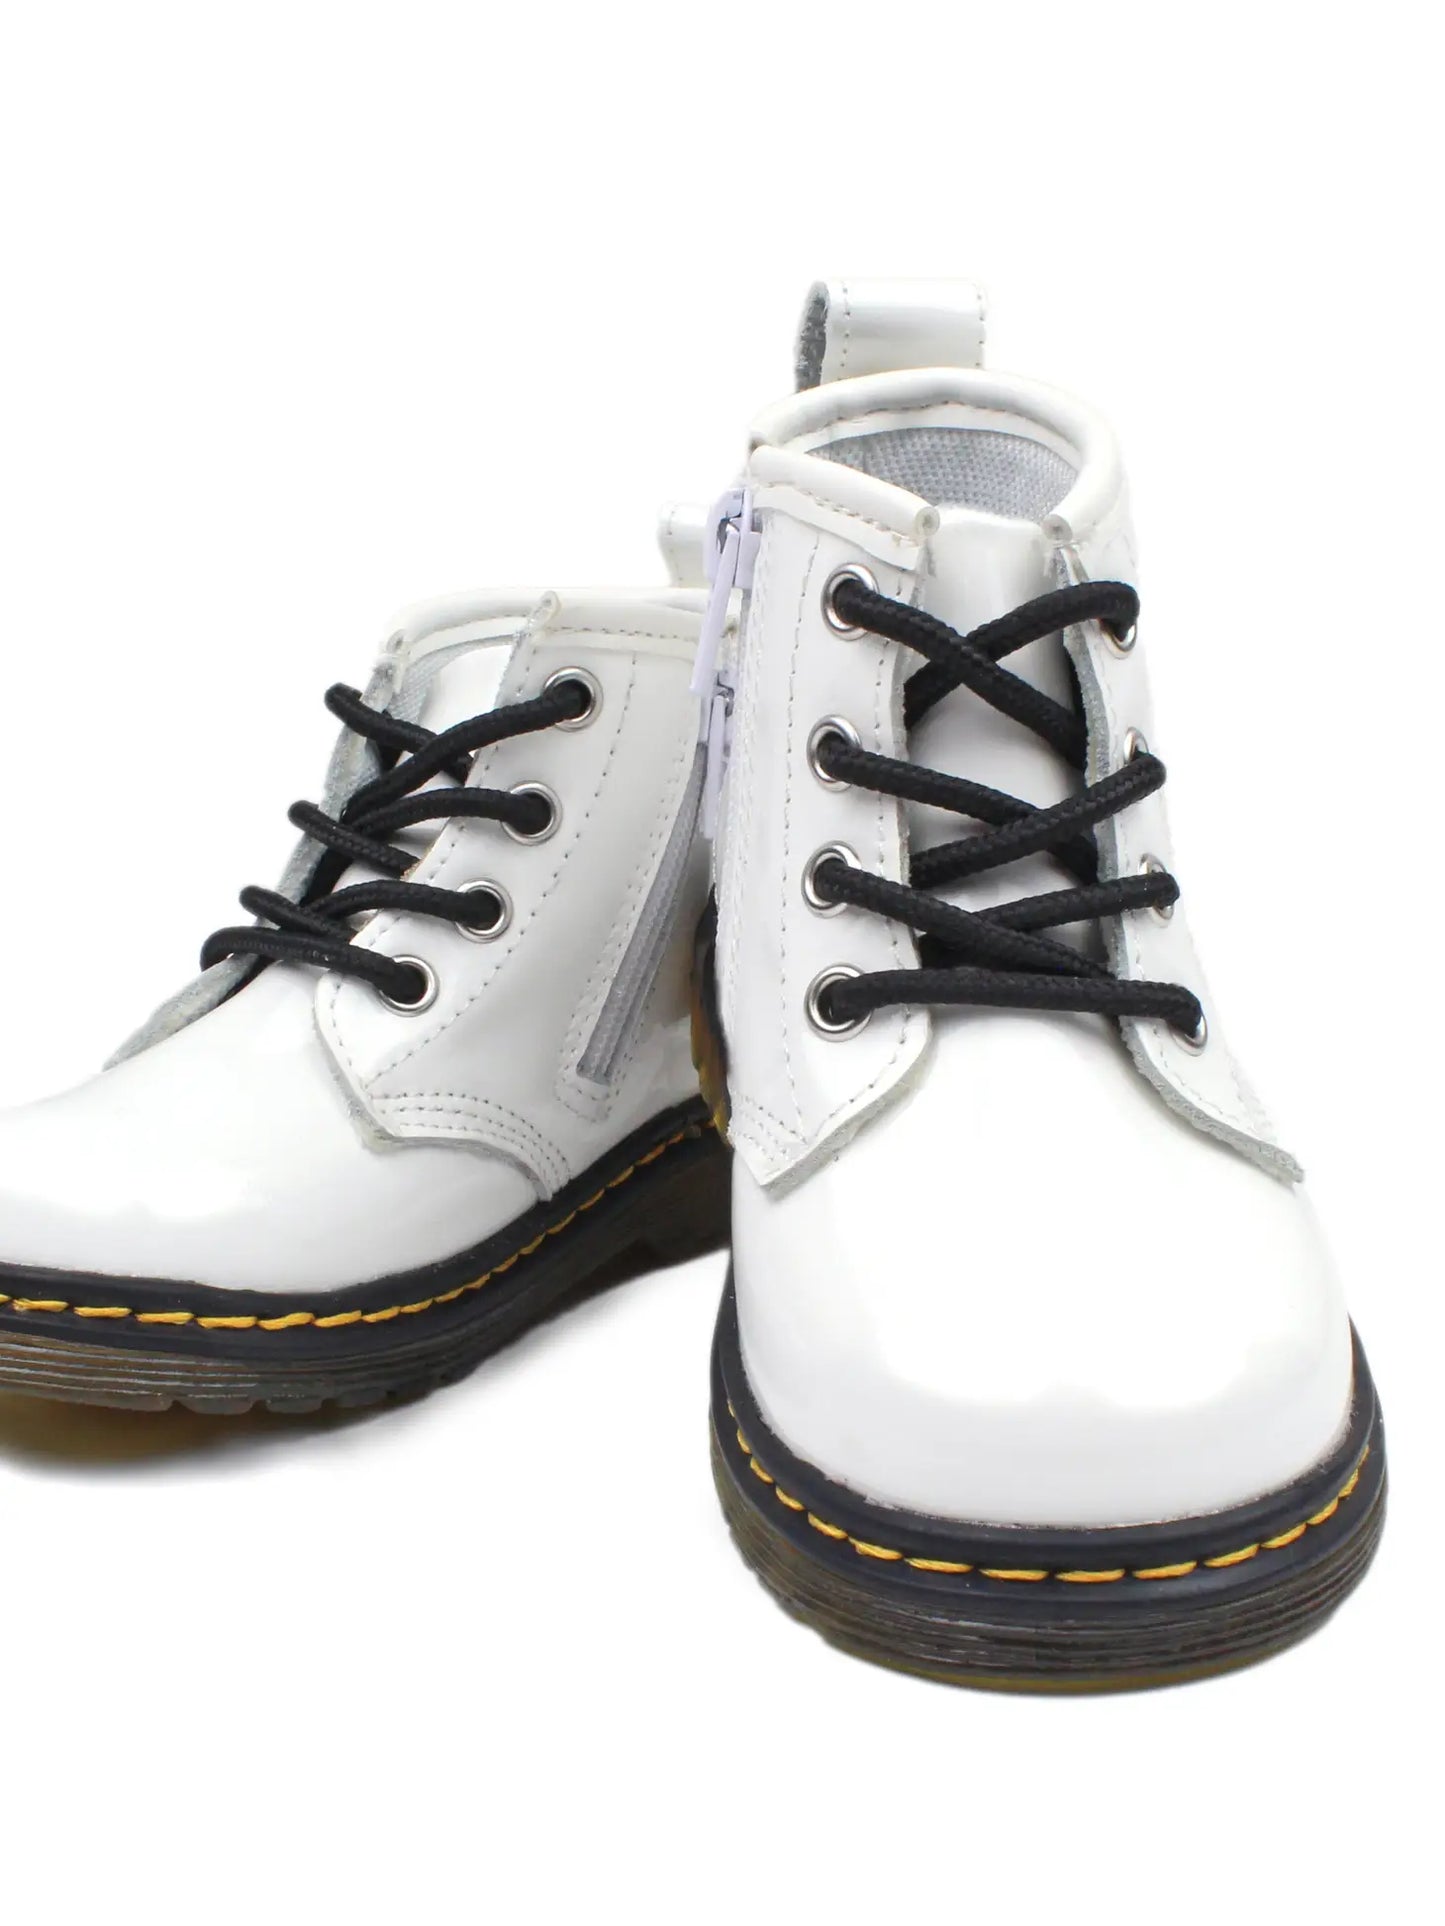 piper finn combat boots white zipper side 